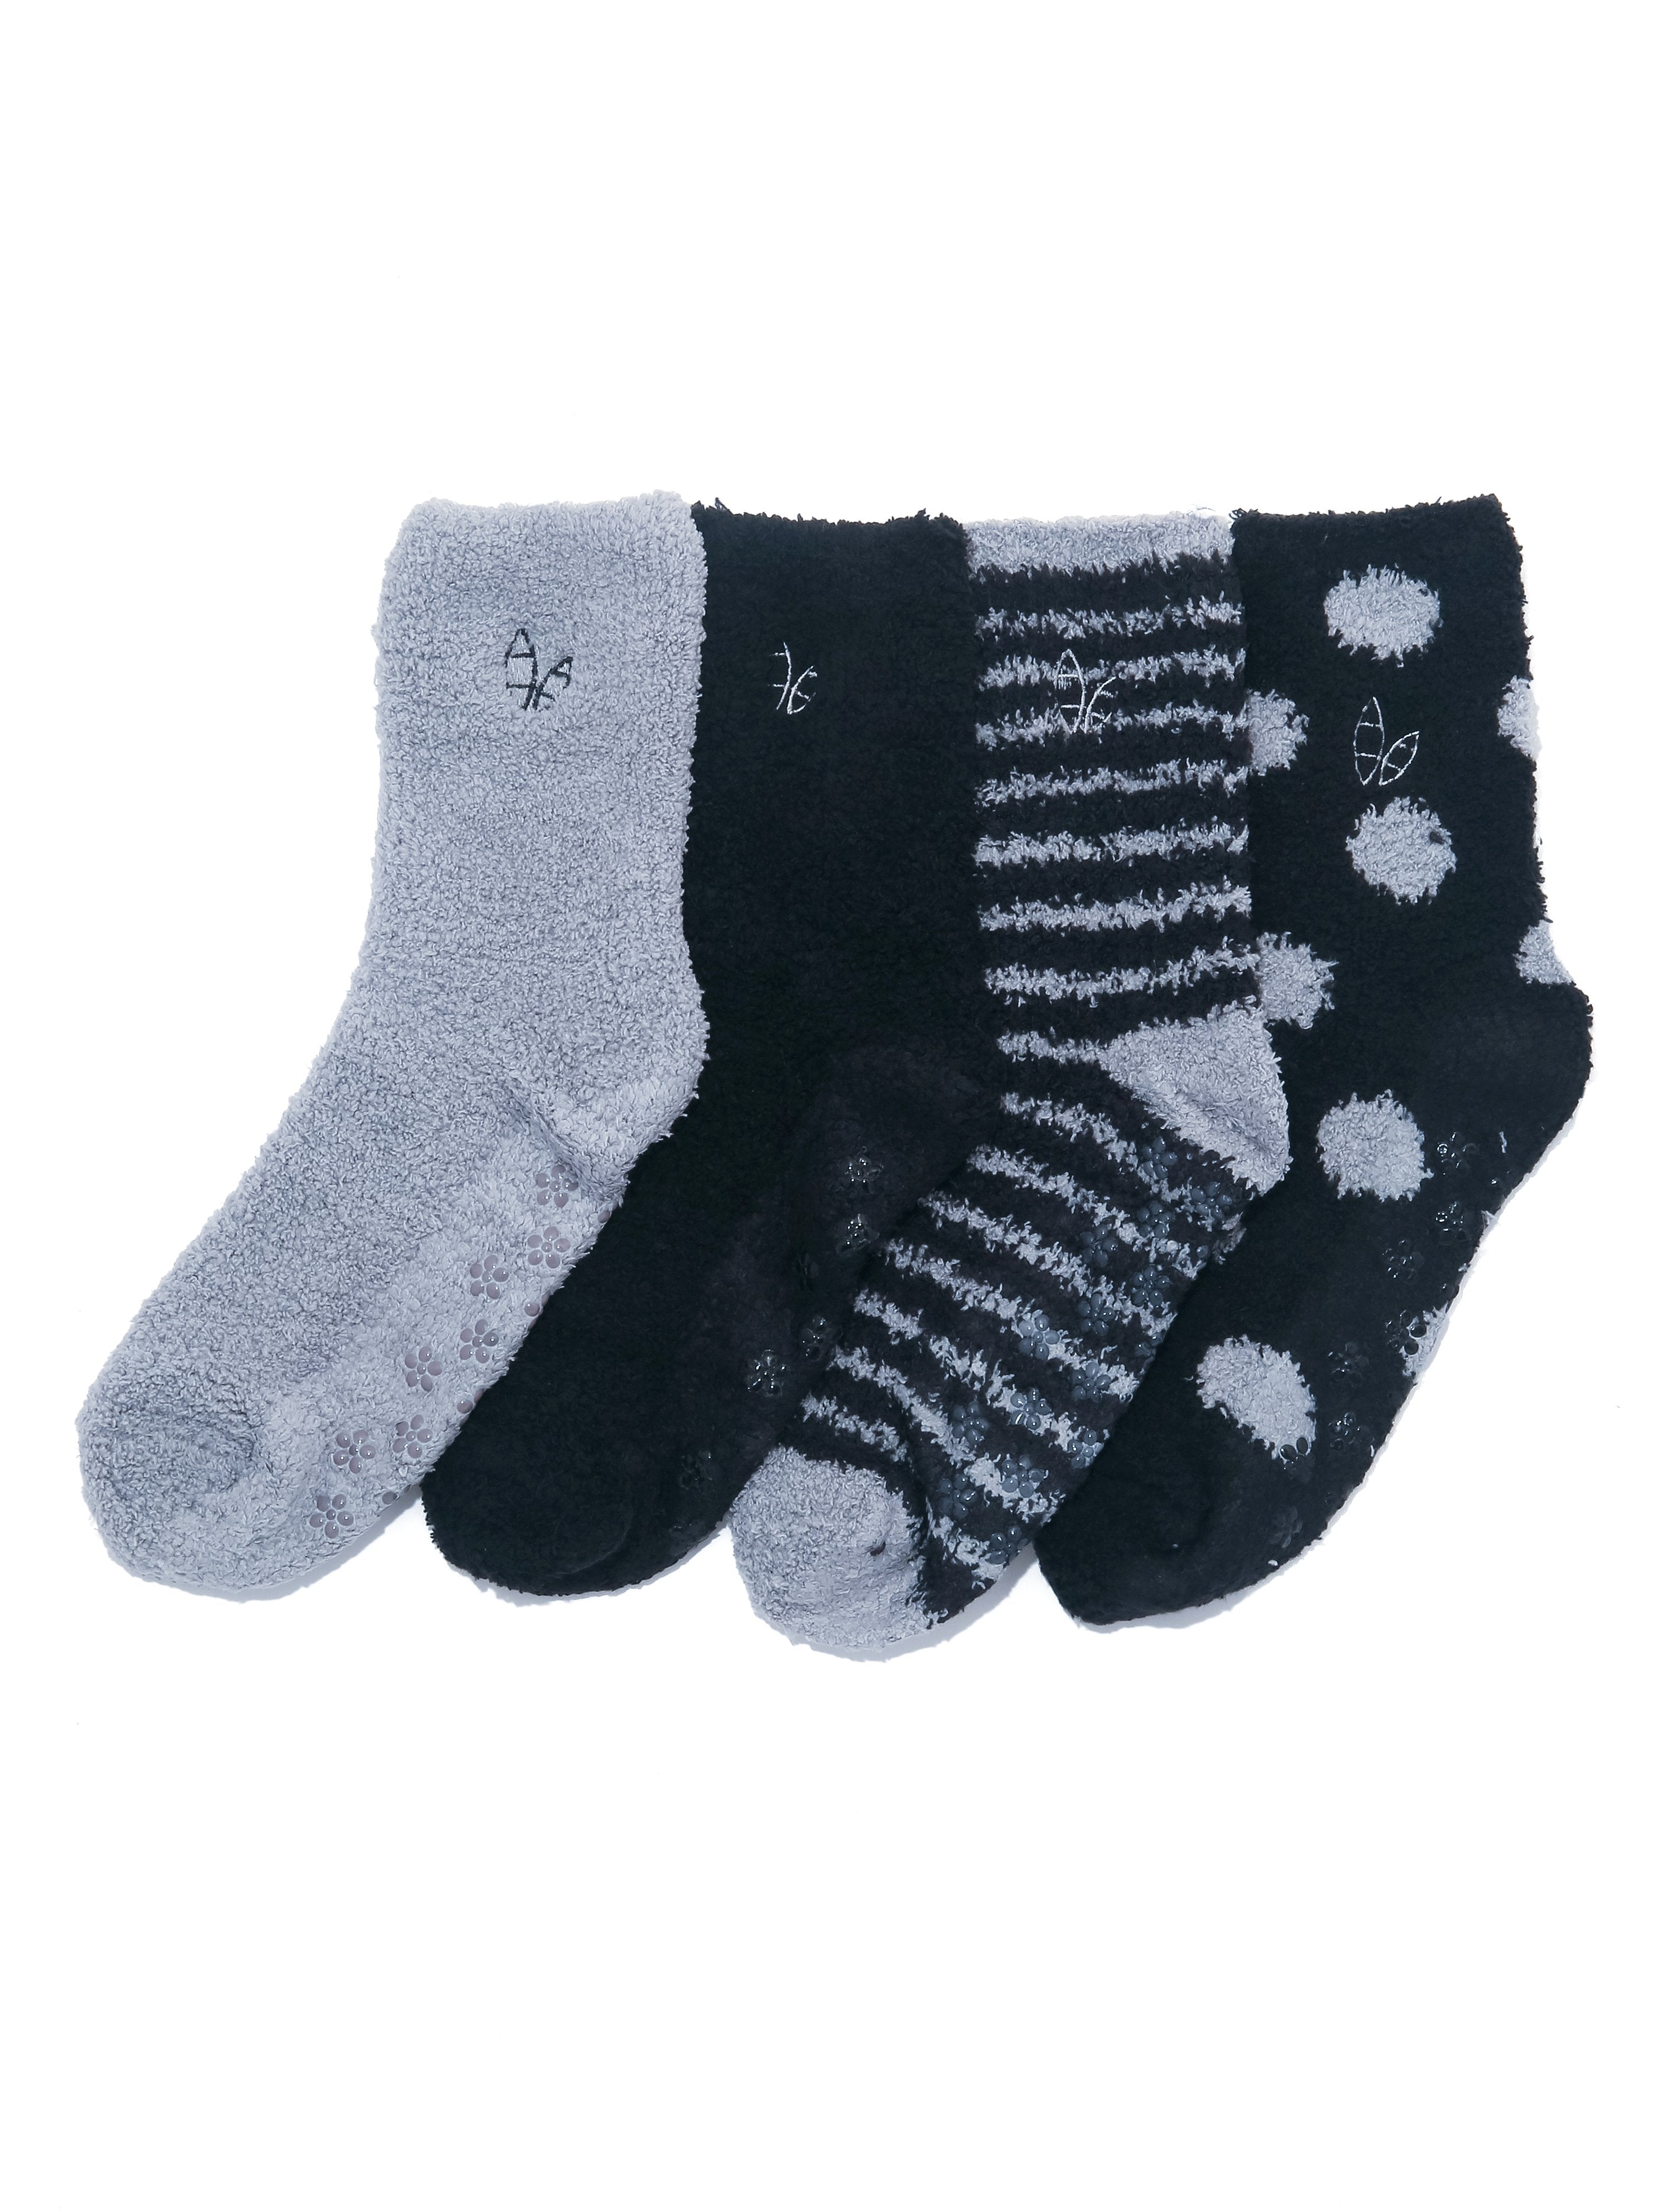 Women's (4 Pairs) Soft Anti-Skid Fuzzy Winter Crew Socks - Set A10